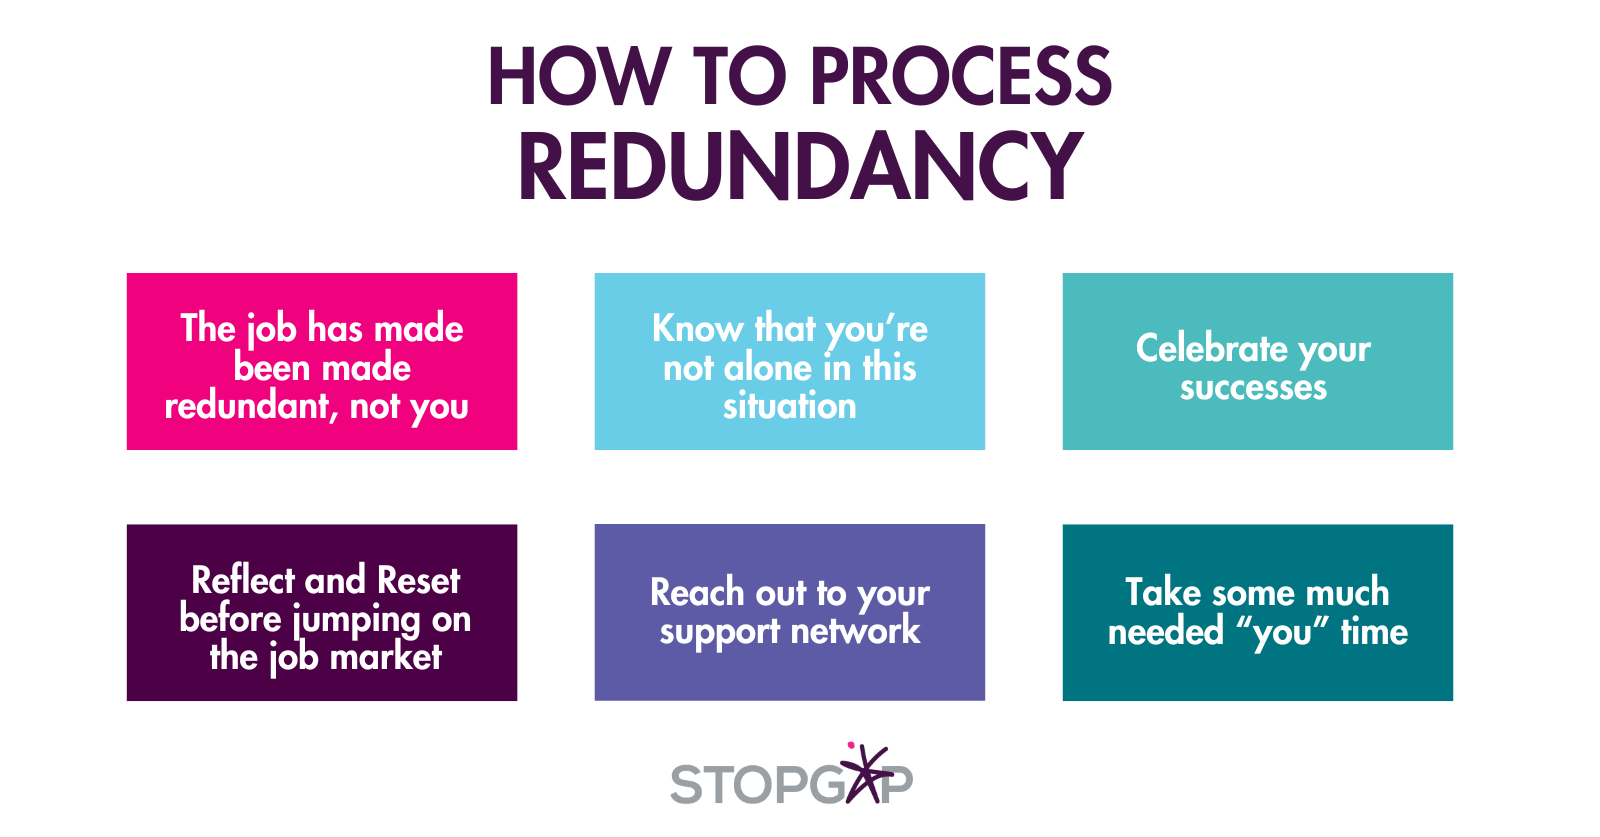 How to process redundancy - tips